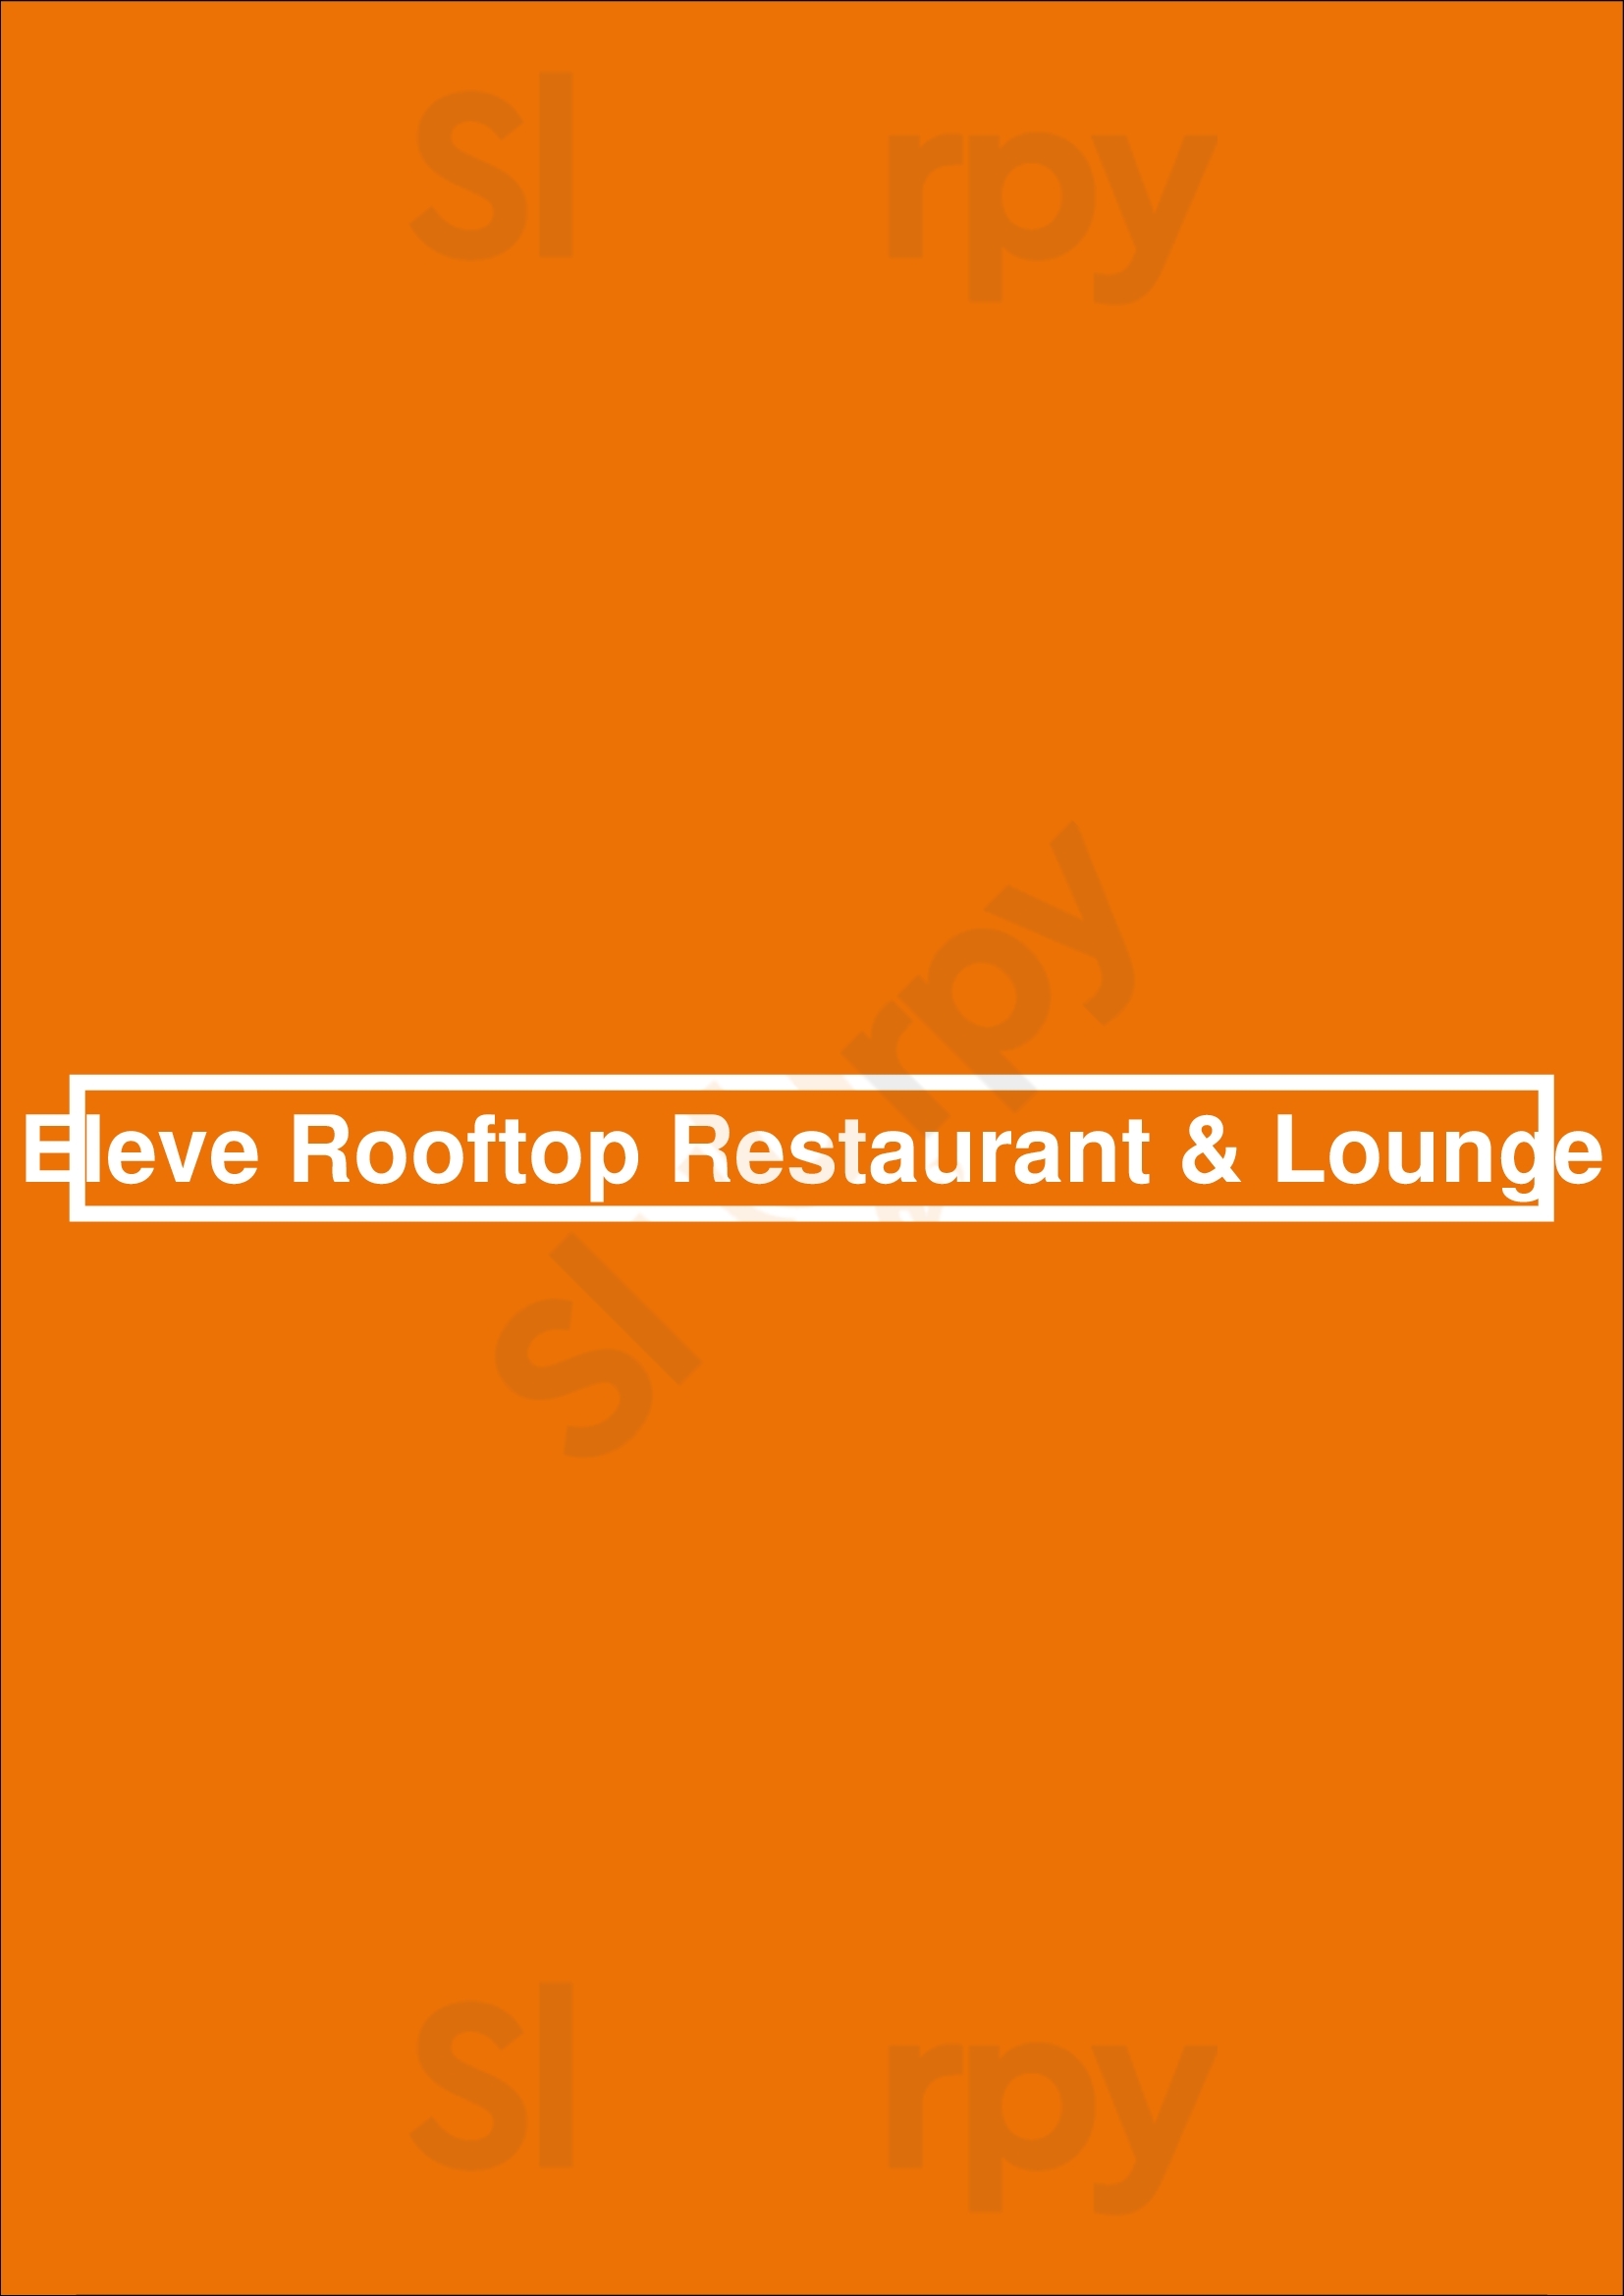 Eleve Rooftop Restaurant & Lounge Charleston Menu - 1